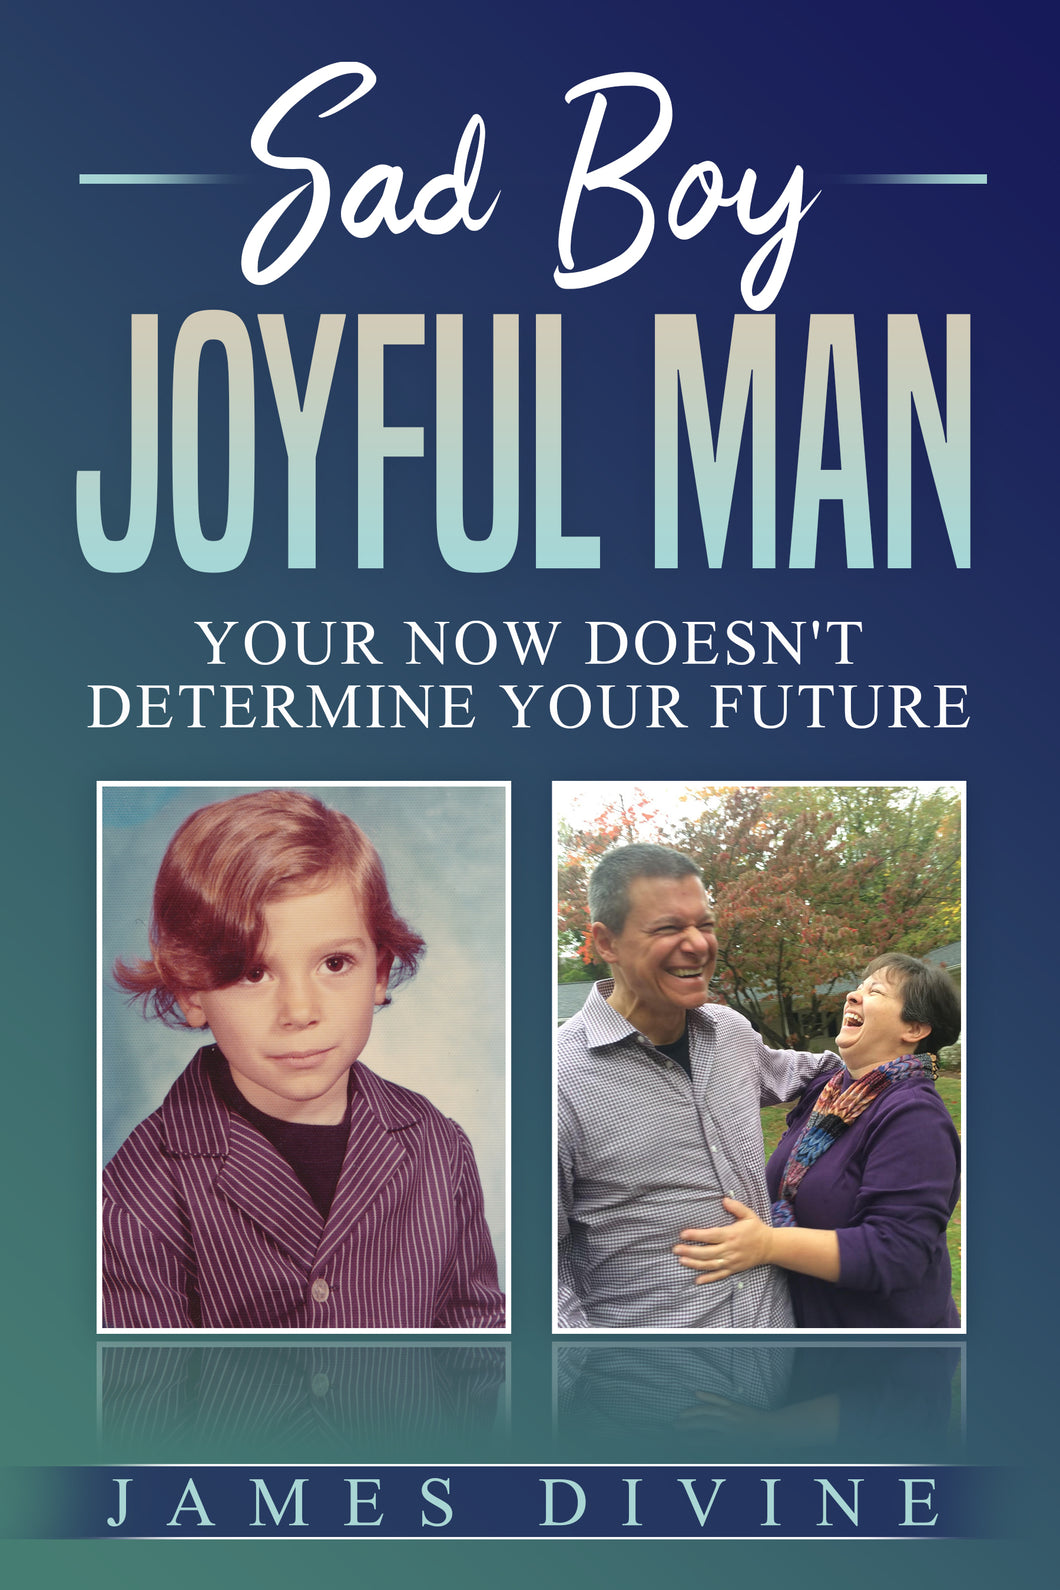 Sad Boy Joyful Man - PDF Book